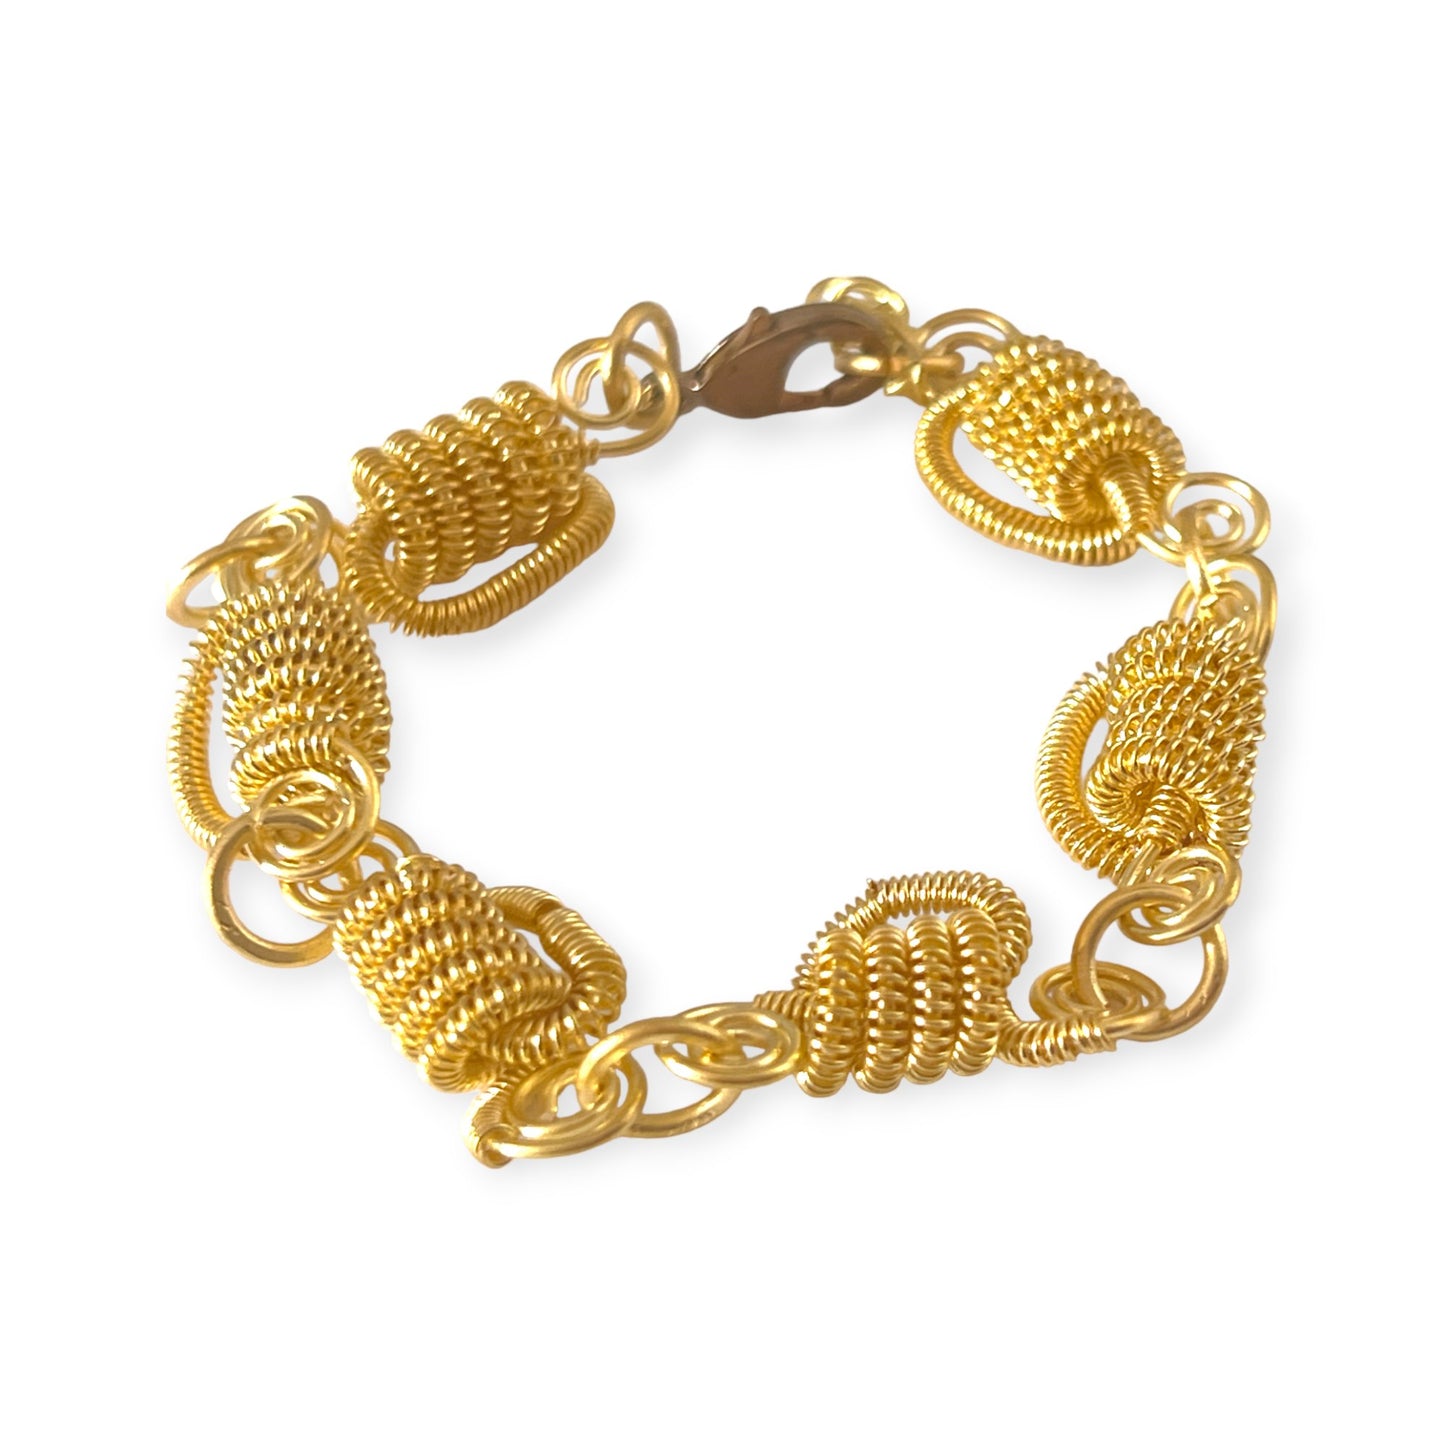 Woven links brass metal bracelet - Sundara Joon